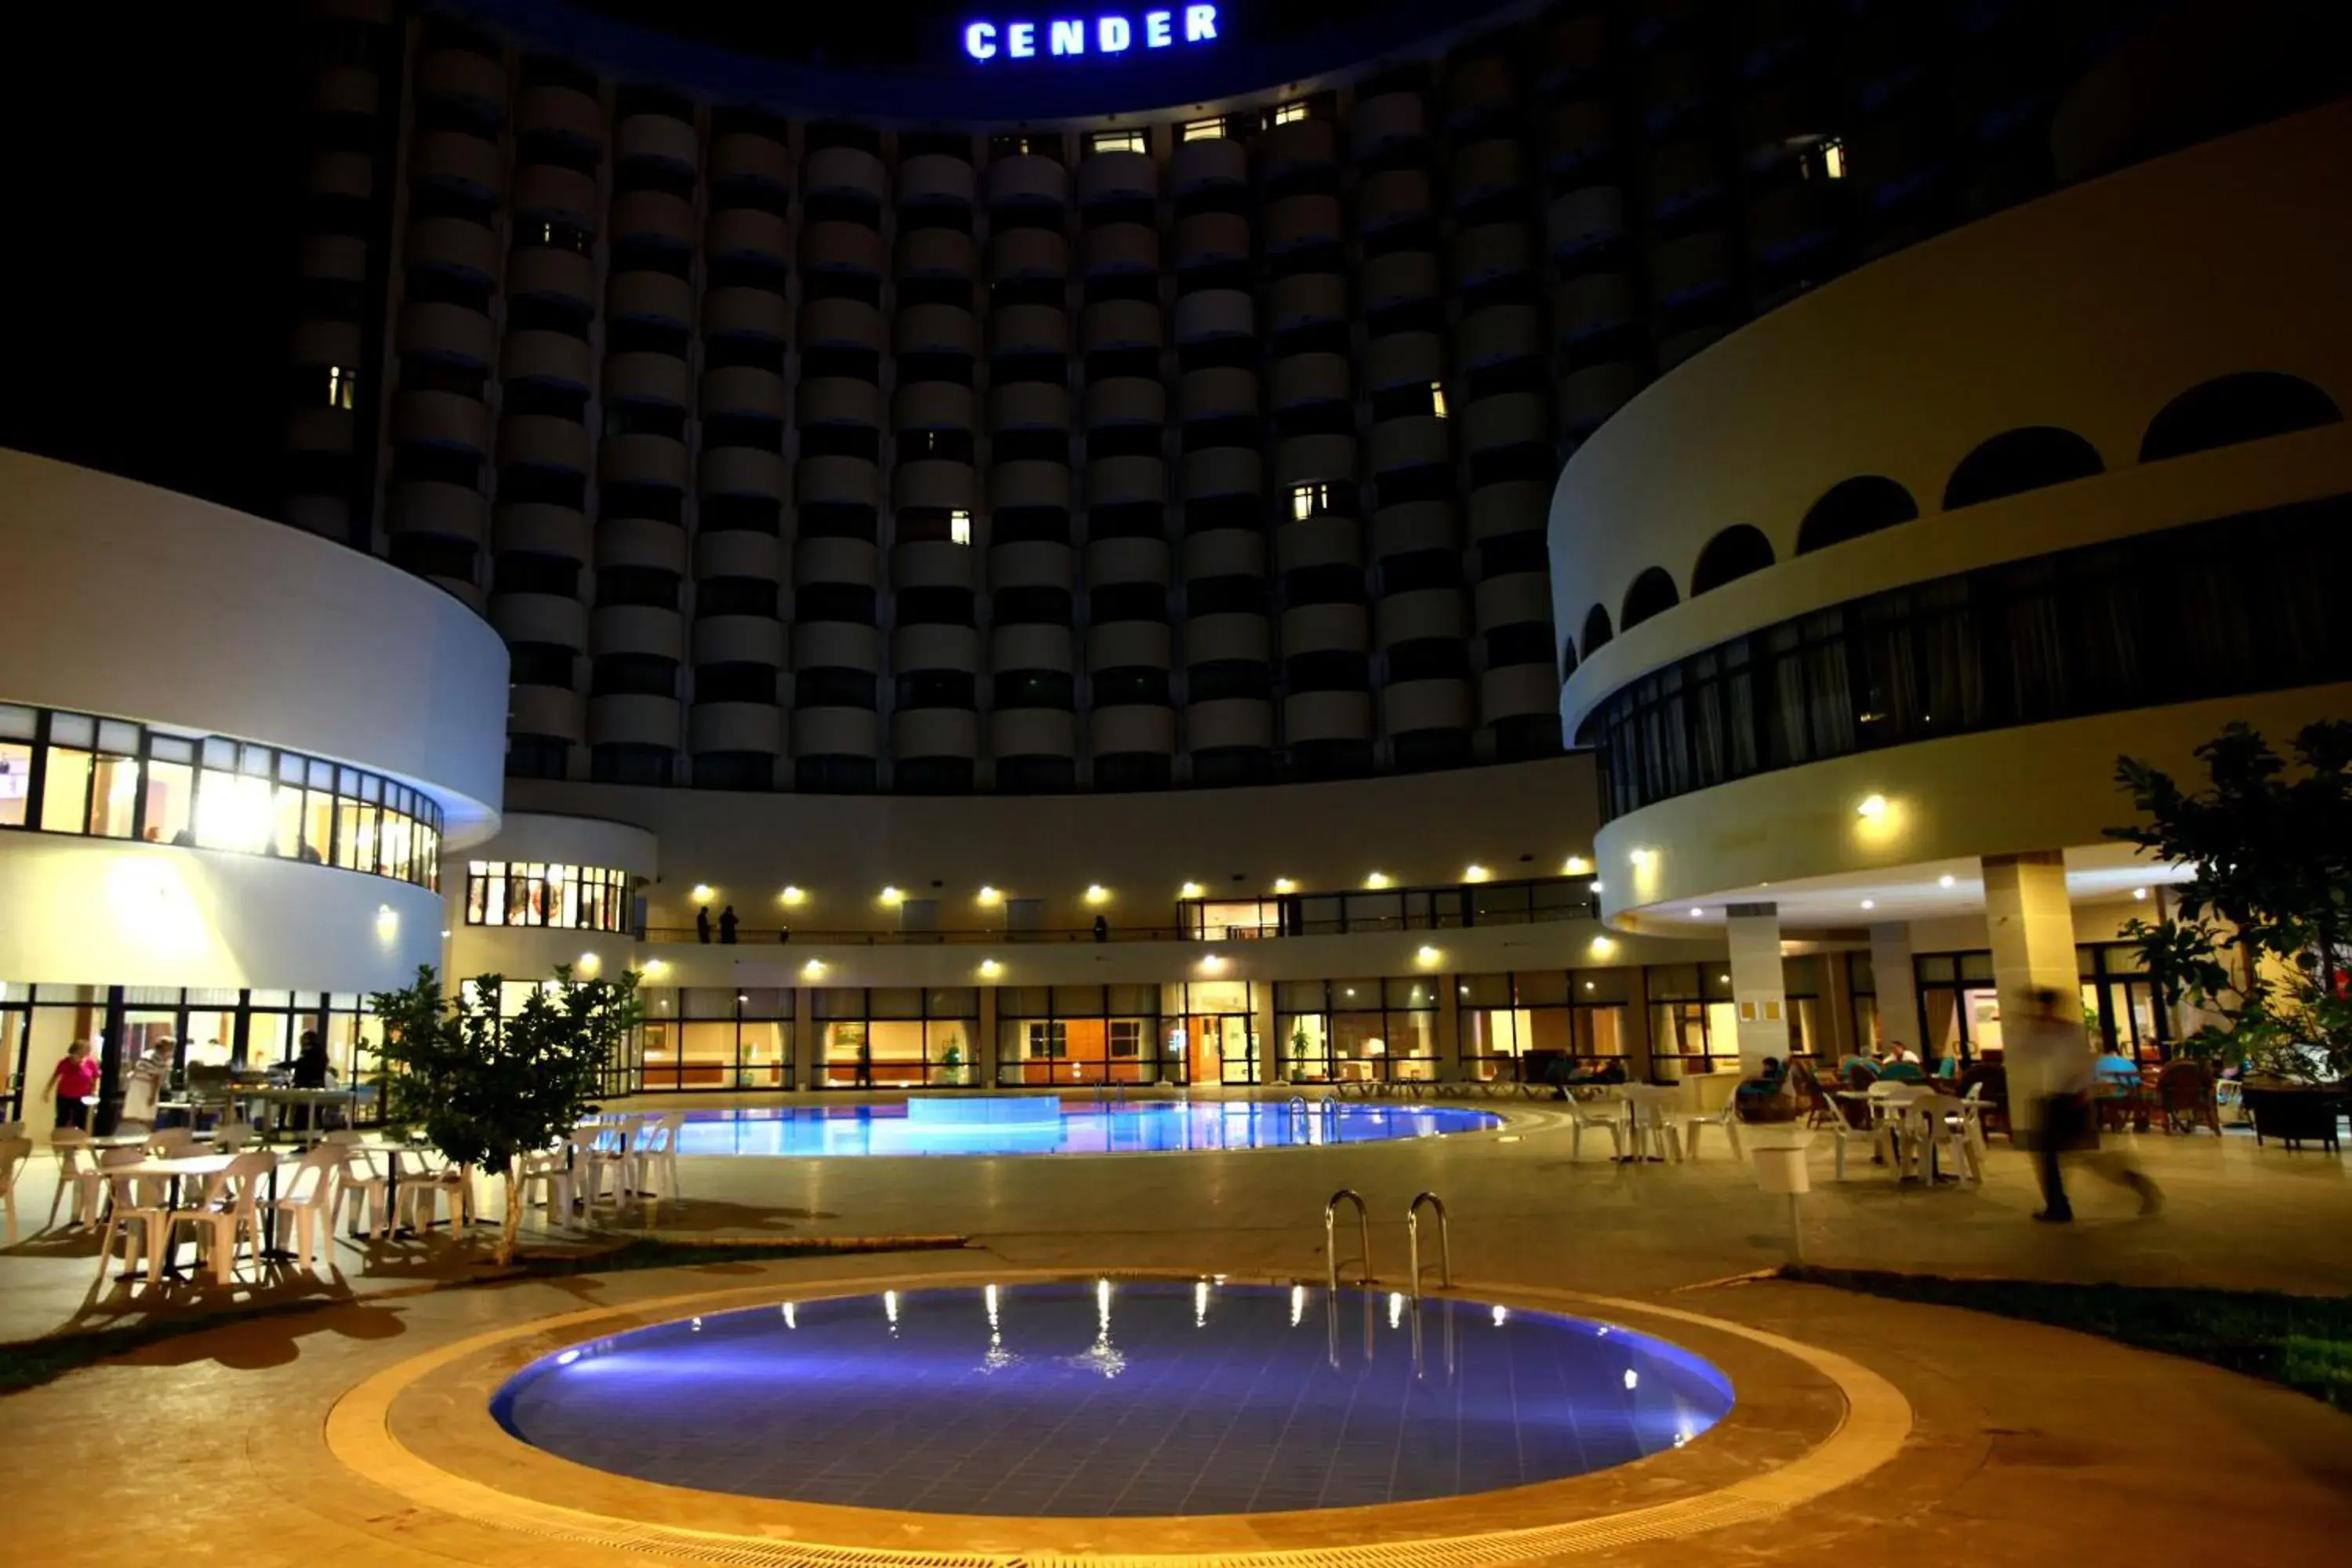 Night, Swimming Pool in Cender Hotel